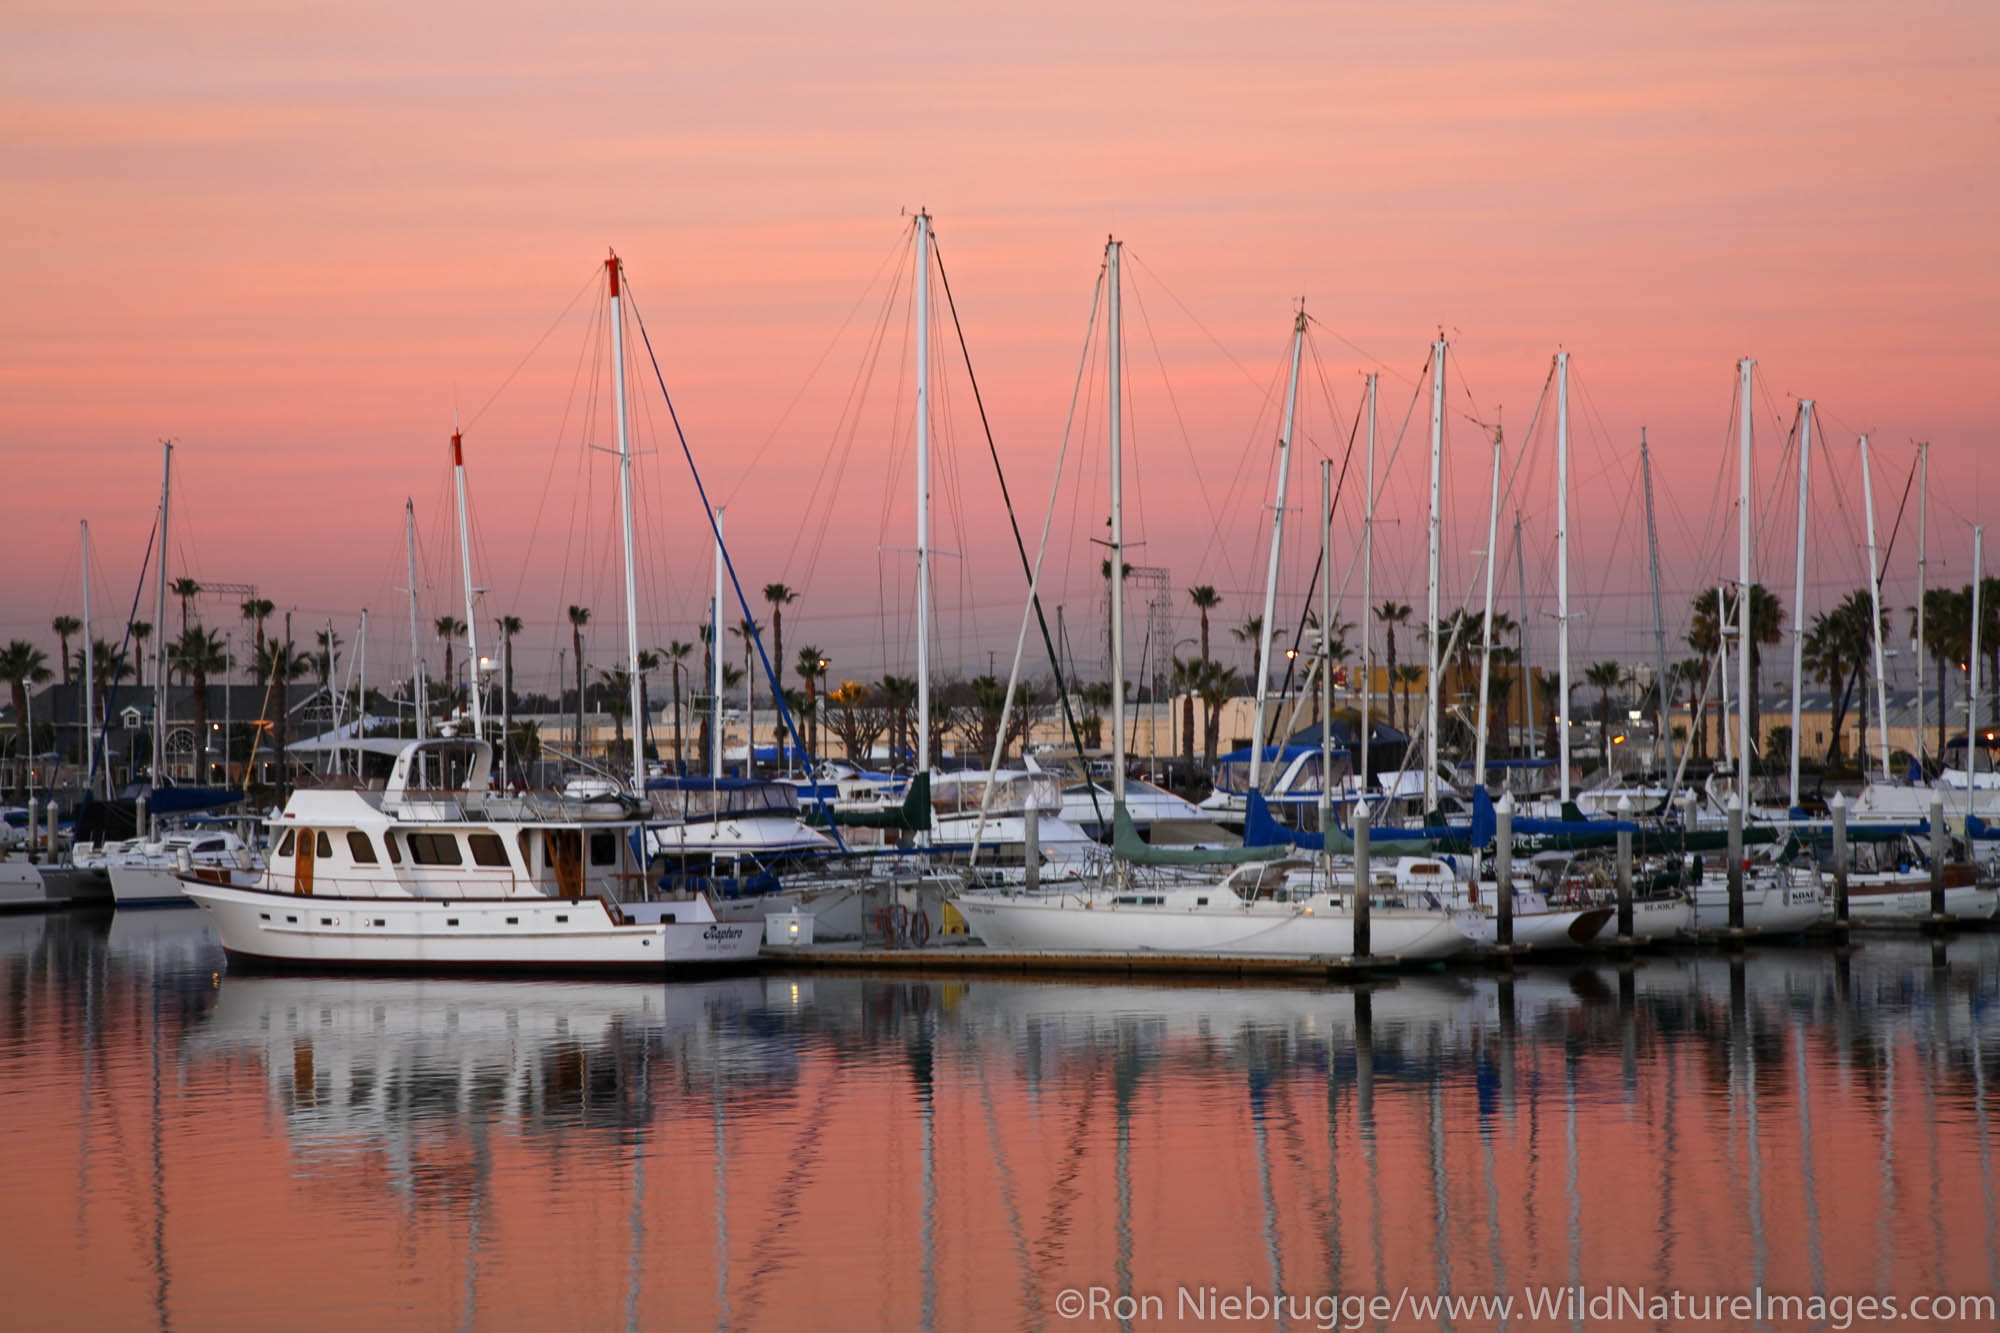 The Chula Vista Marina at sunset, Chula Vista, California.